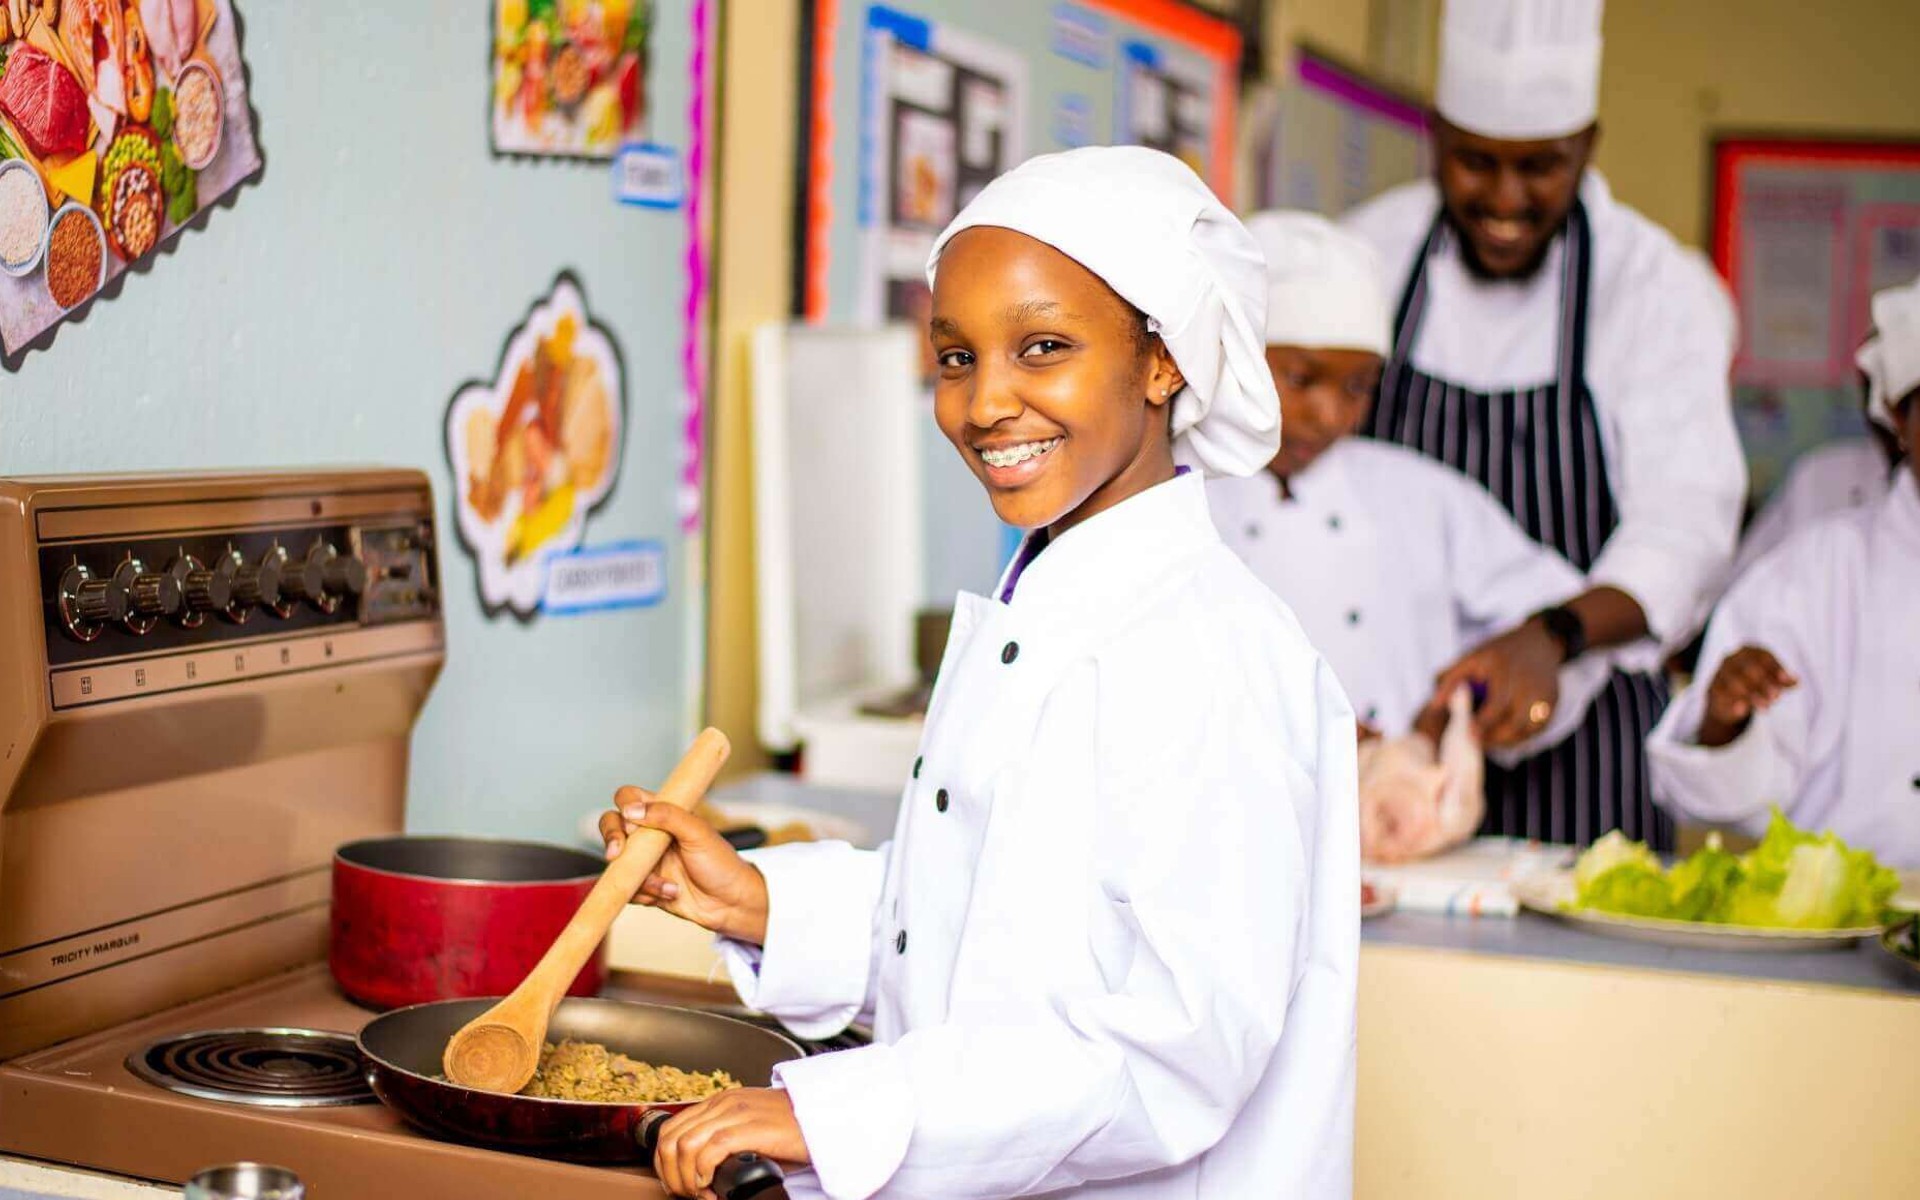 Riara Junior high school students in the kitchen under supervision of their chef teacher